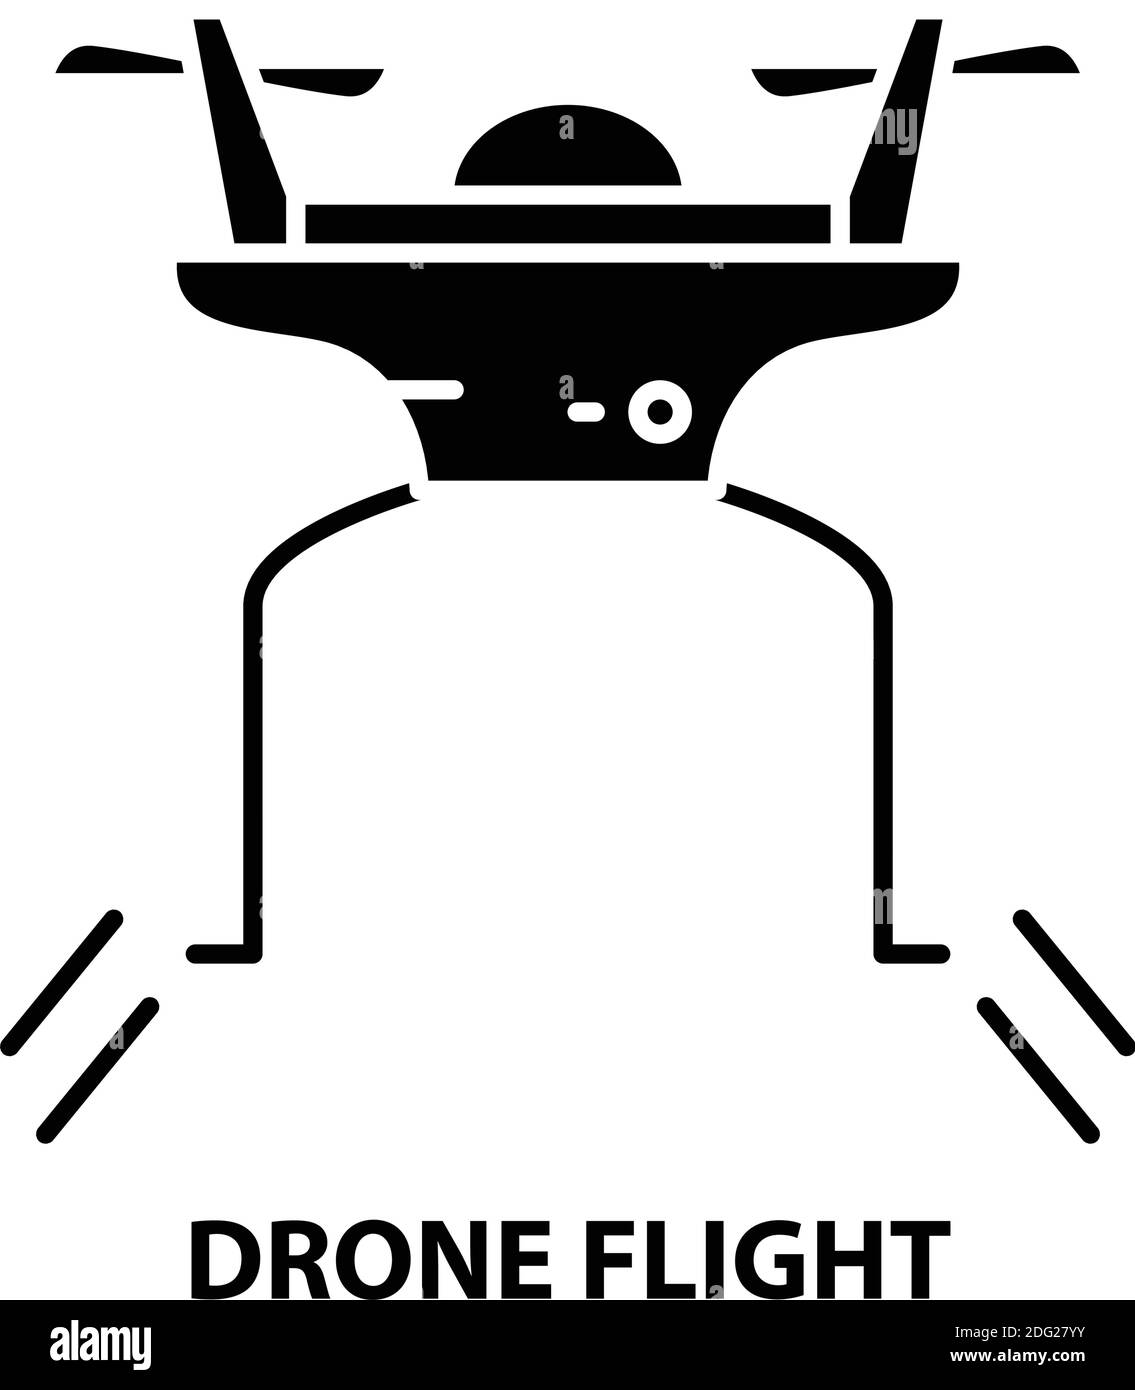 drone flight icon, black vector sign with editable strokes, concept illustration Stock Vector